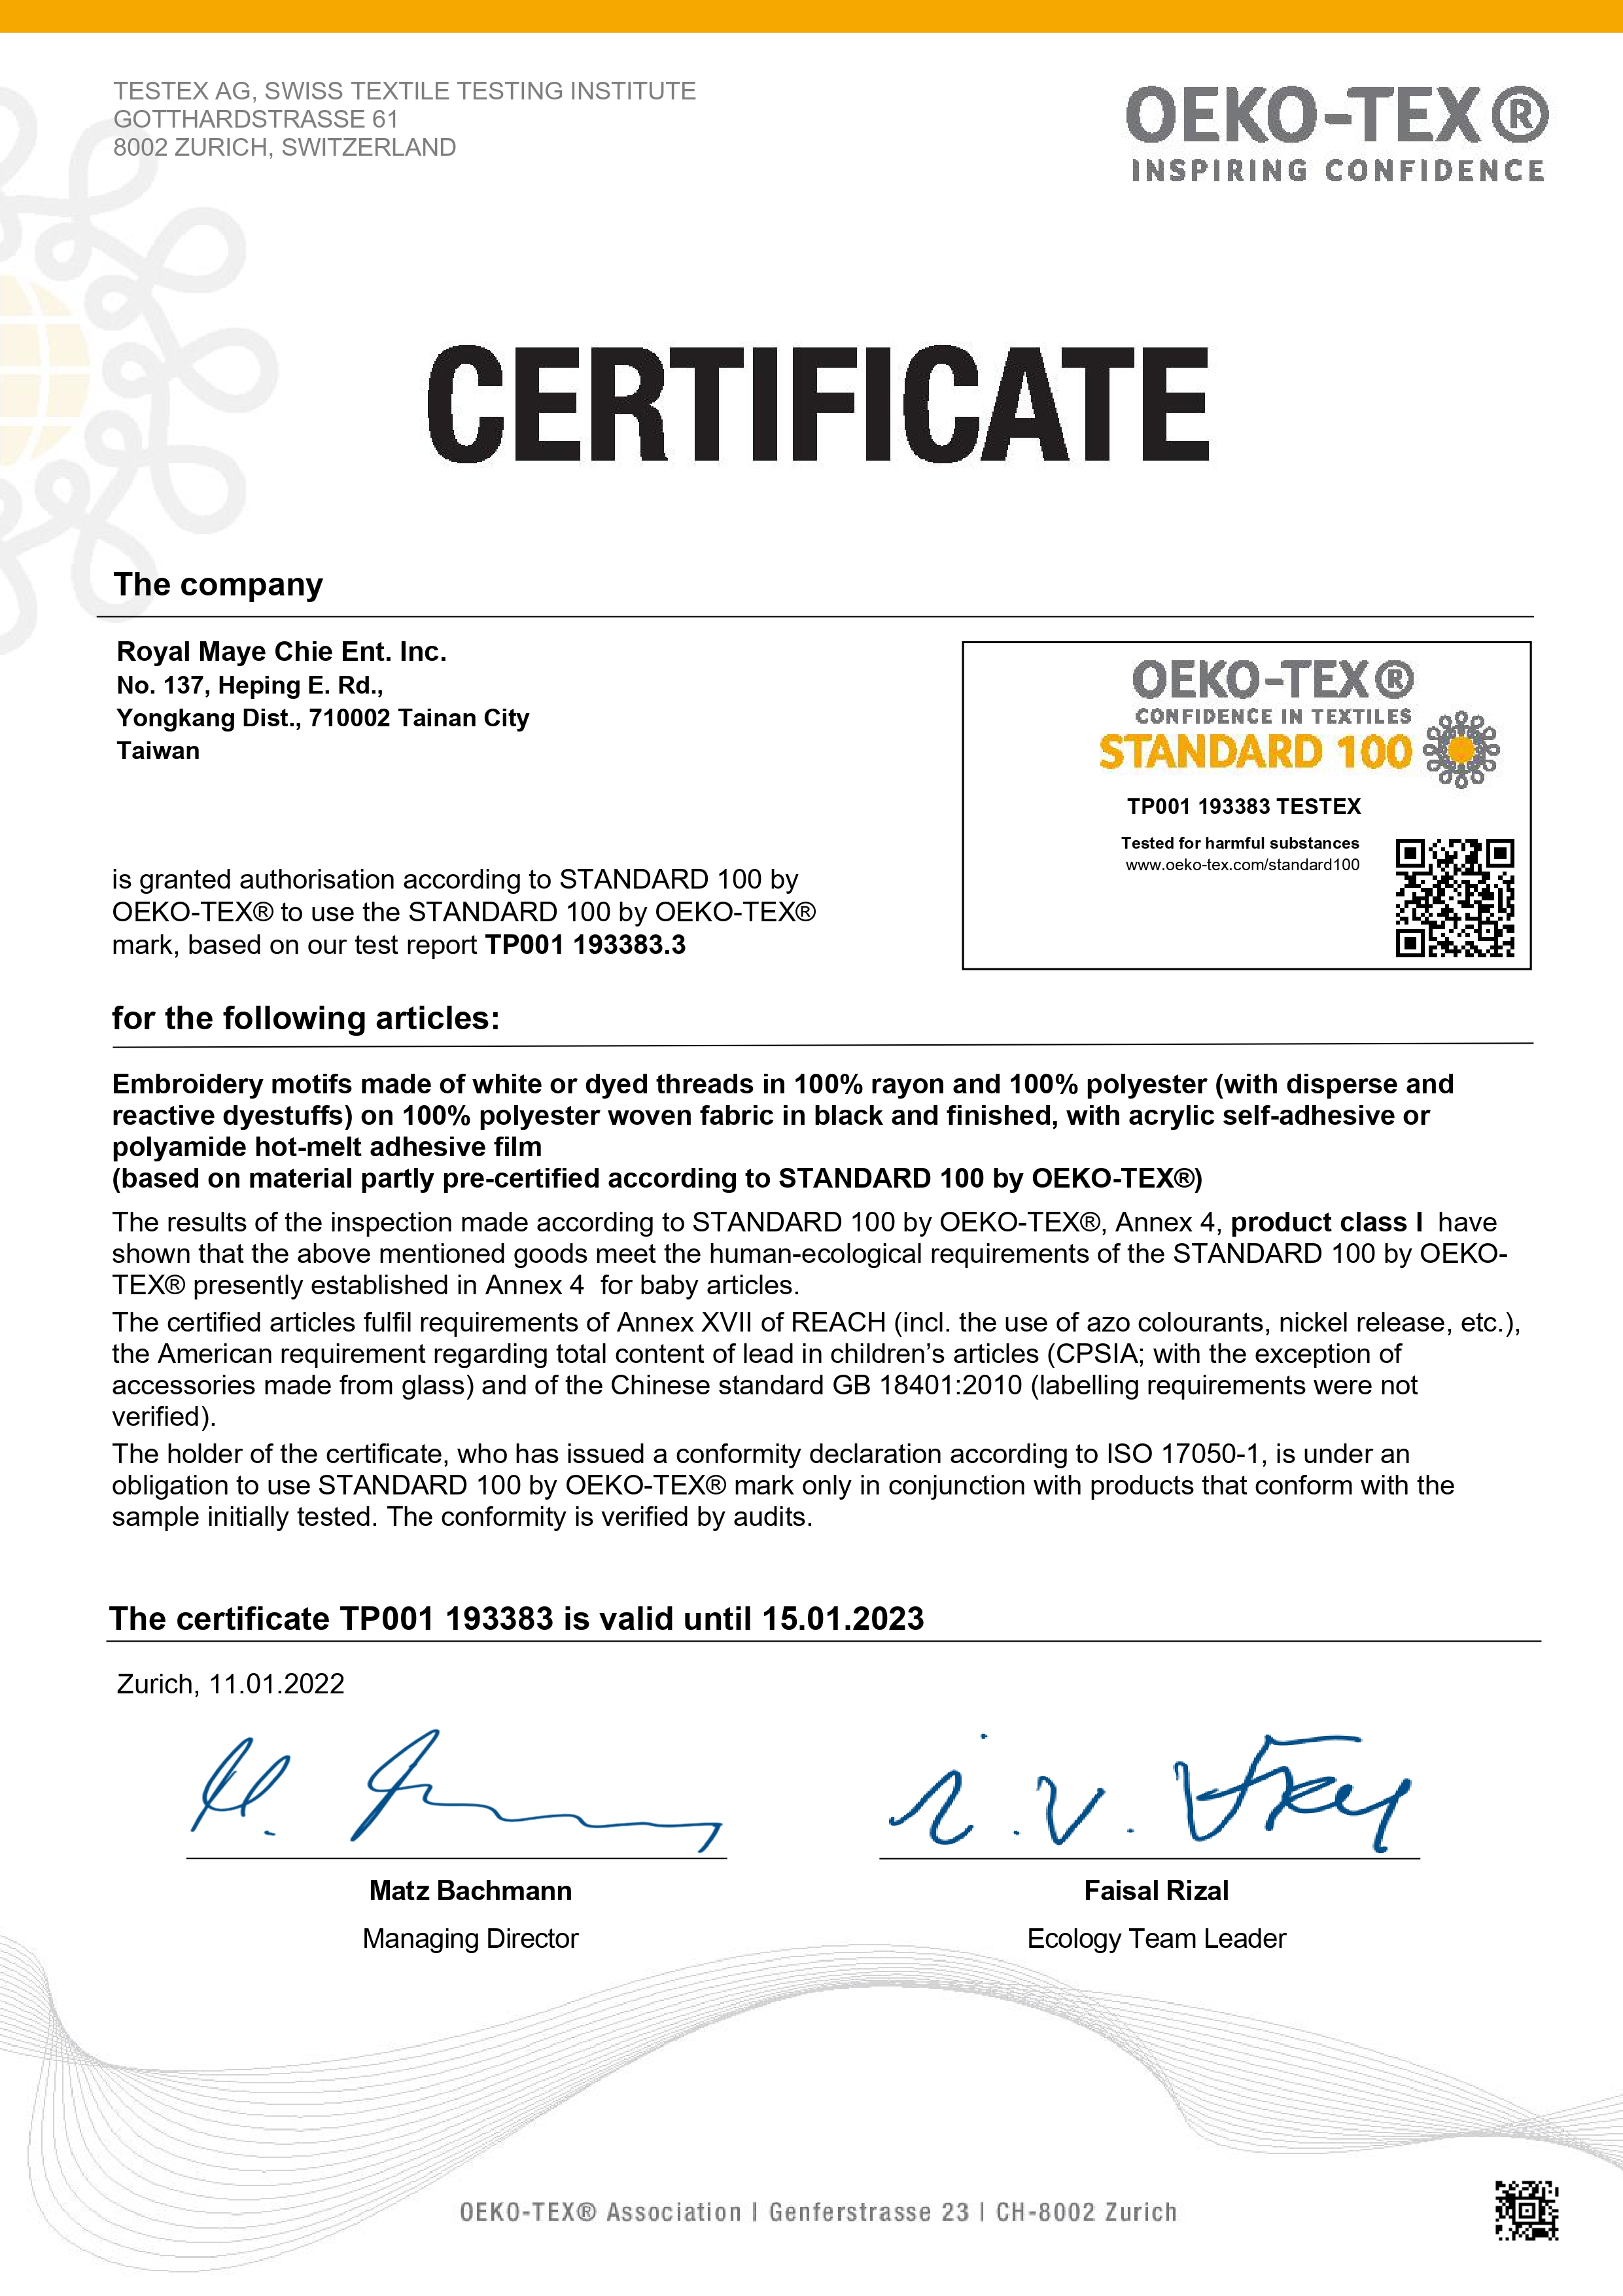 2022 RMC OEKO-TEX Certificate